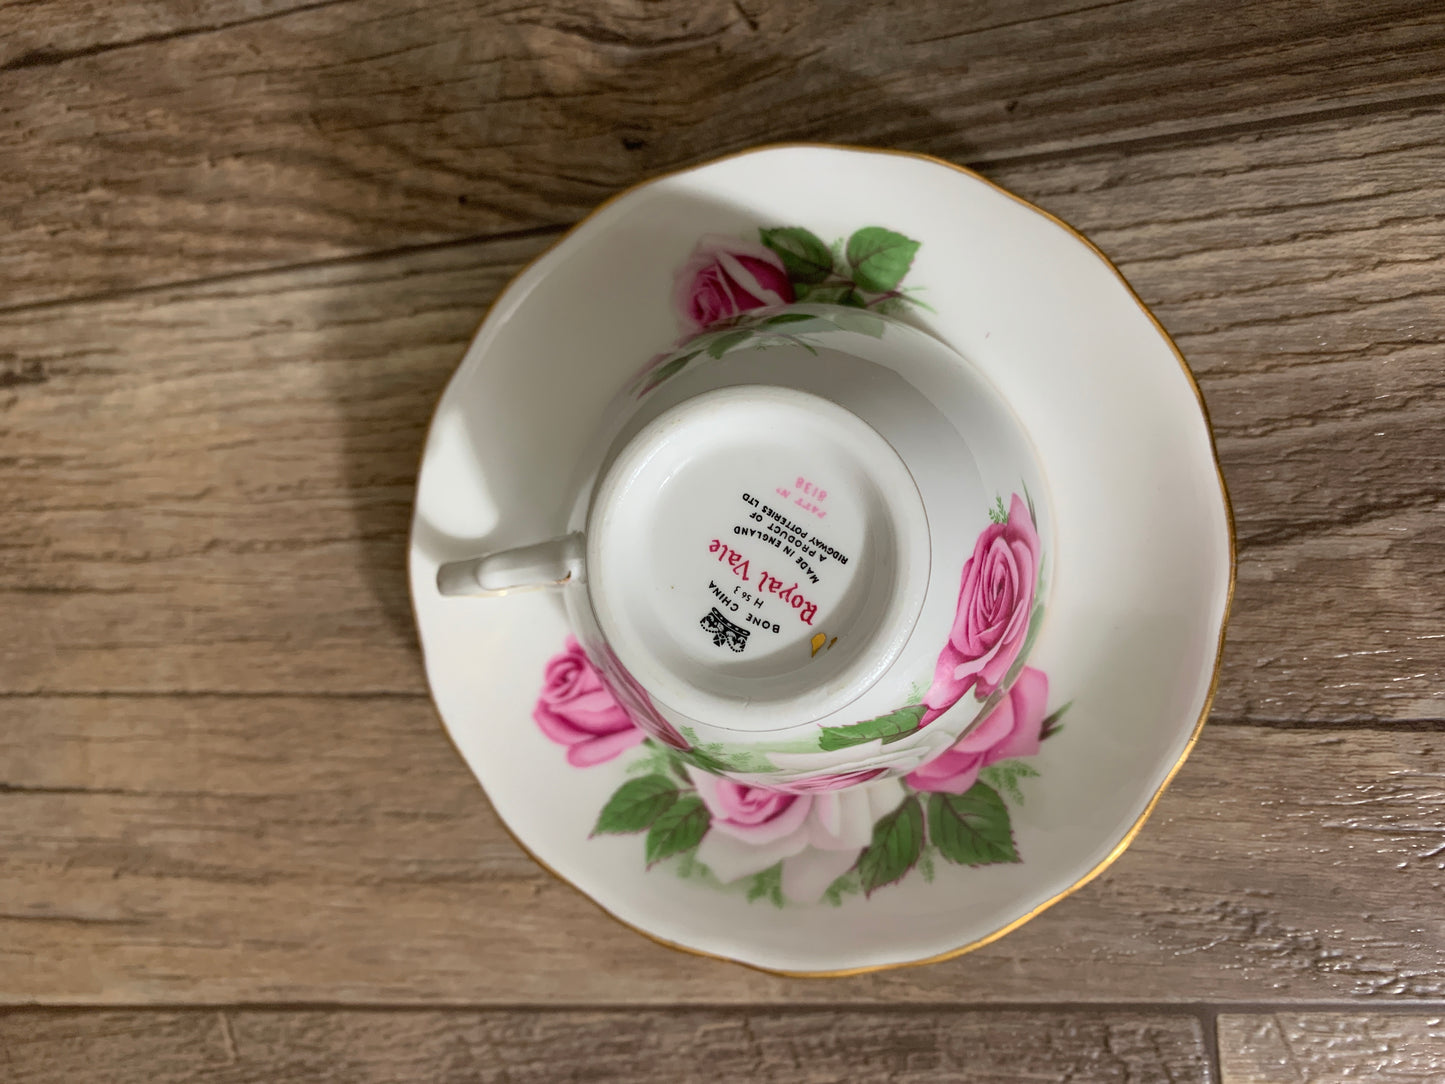 Vintage Teacup with Soft Pink Roses Vintage Pink Floral Tea Cup and Saucer